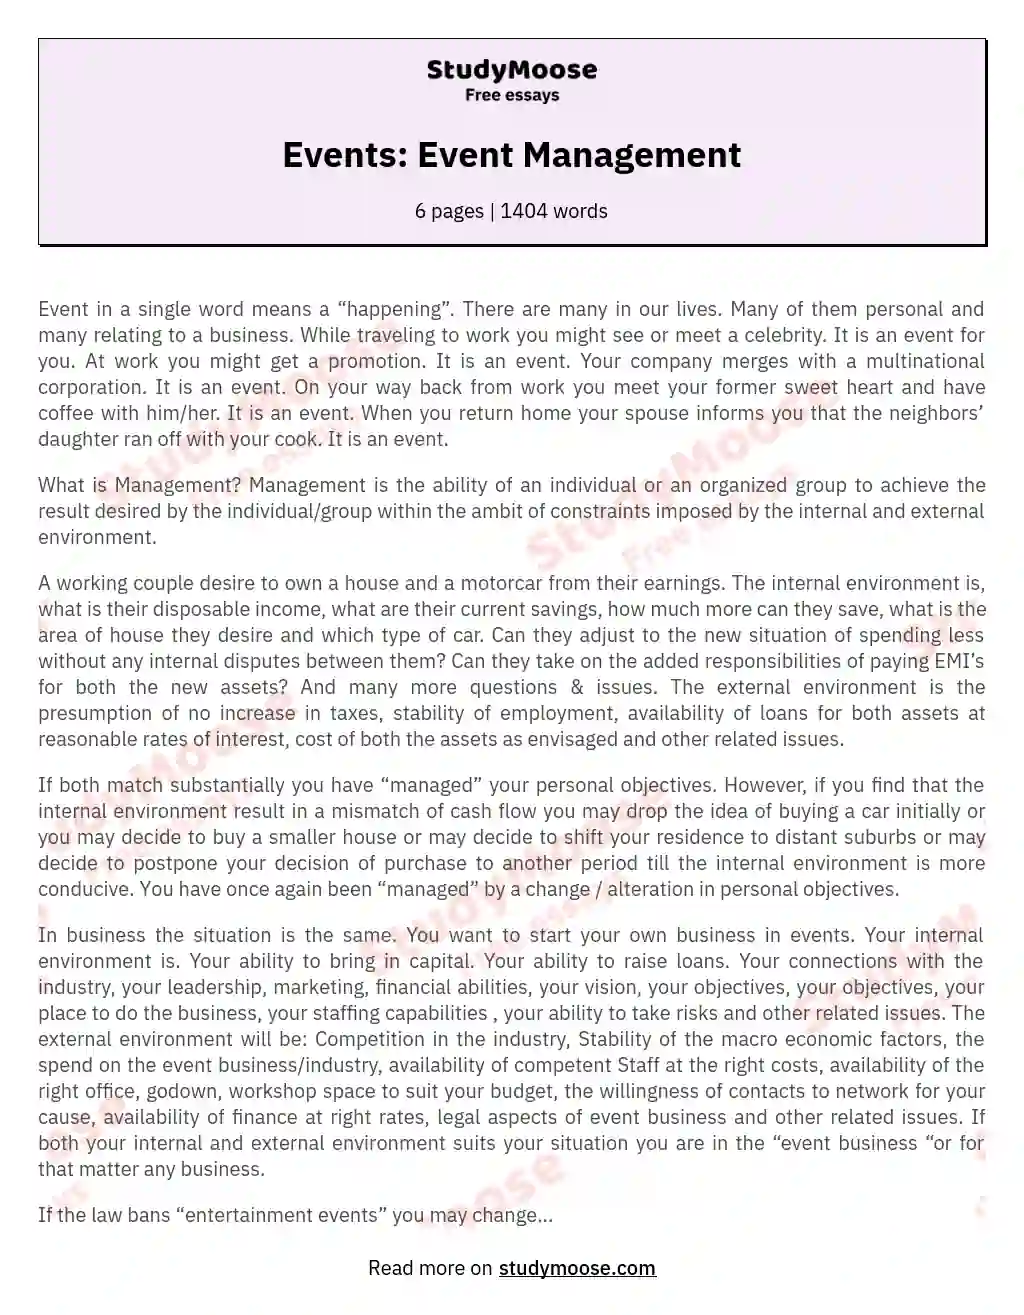 Events: Event Management essay